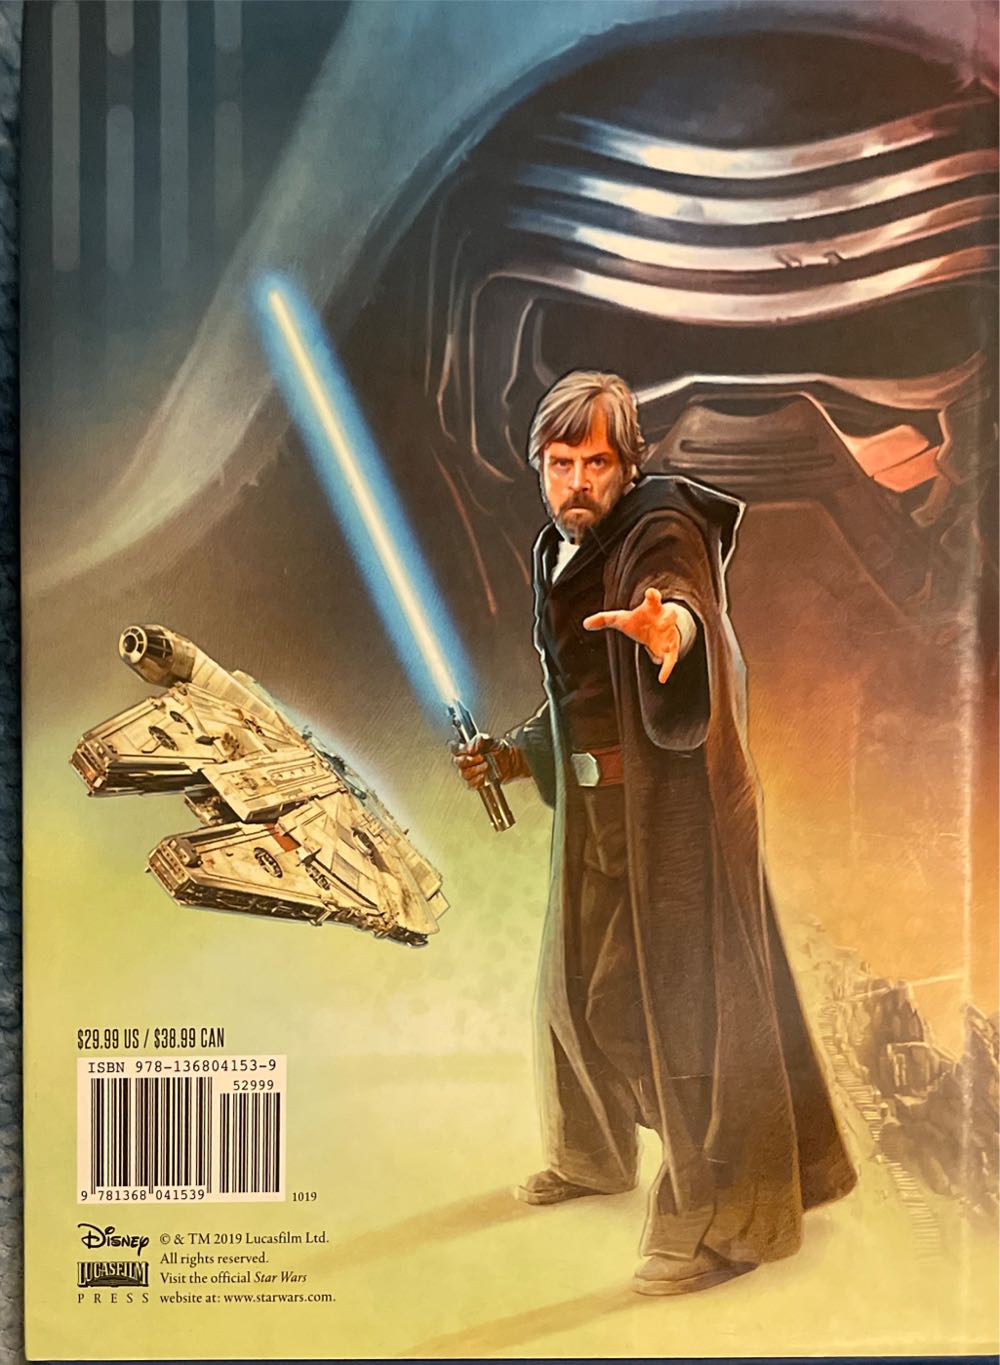 Star Wars The Skywalker Saga - Delilah Dawson (Disney Lucasfilm Press) book collectible [Barcode 9781368041539] - Main Image 2